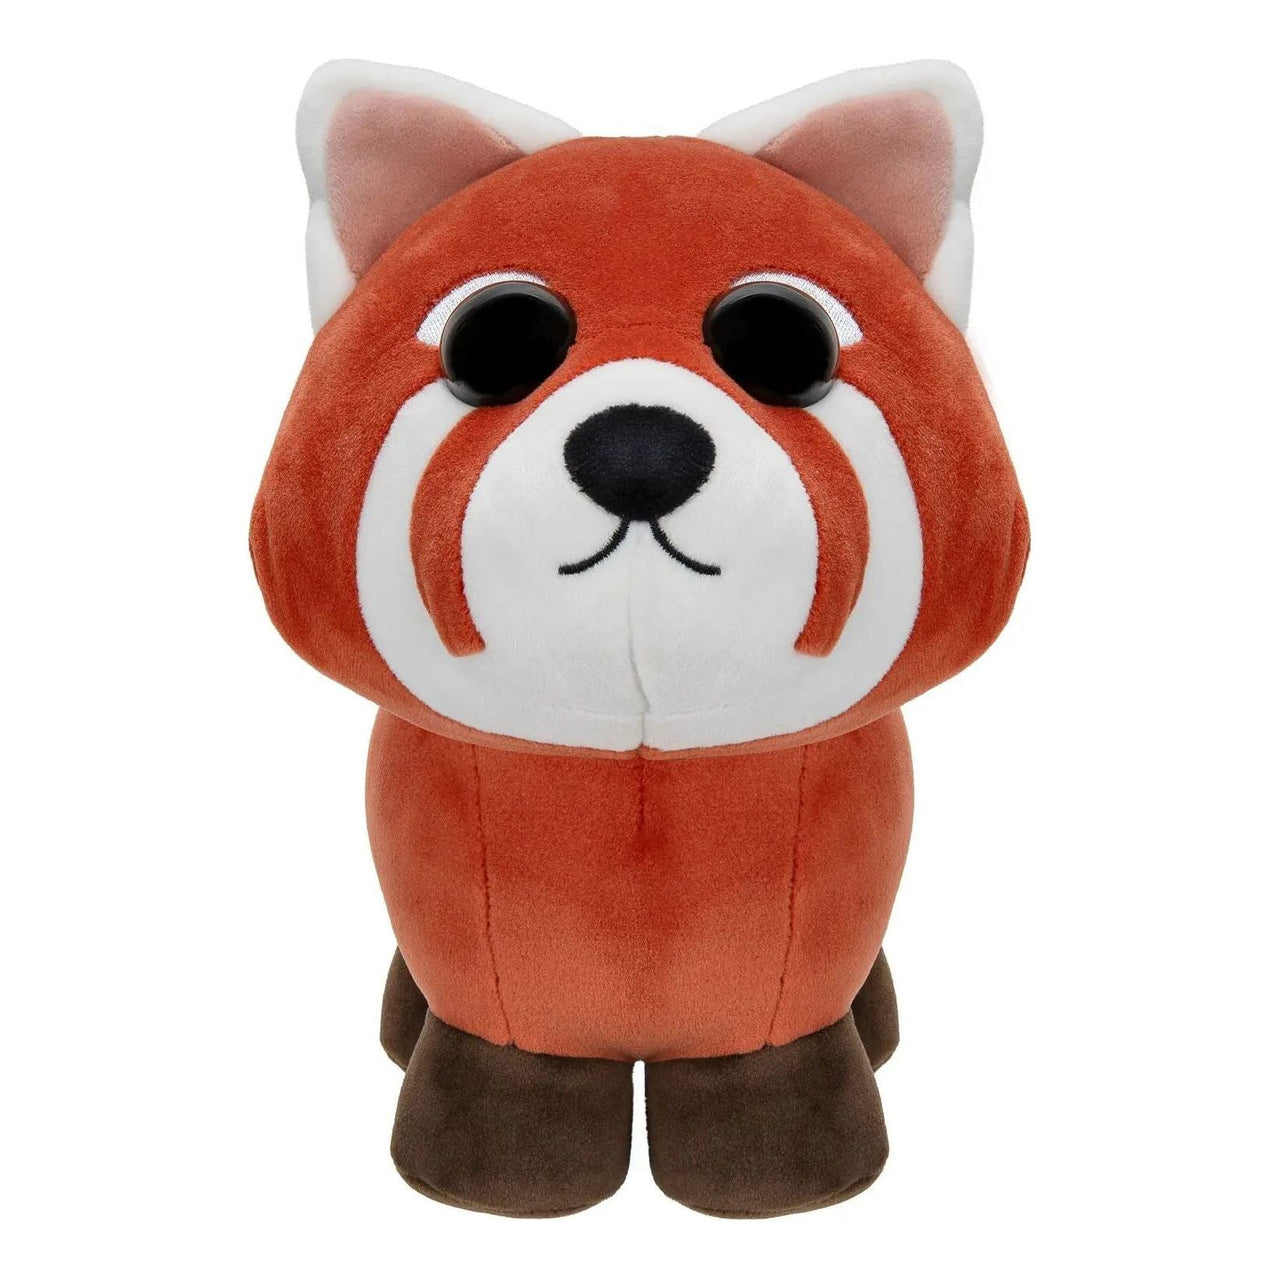 Adopt Me Collector Plush Red Panda Adopt Me